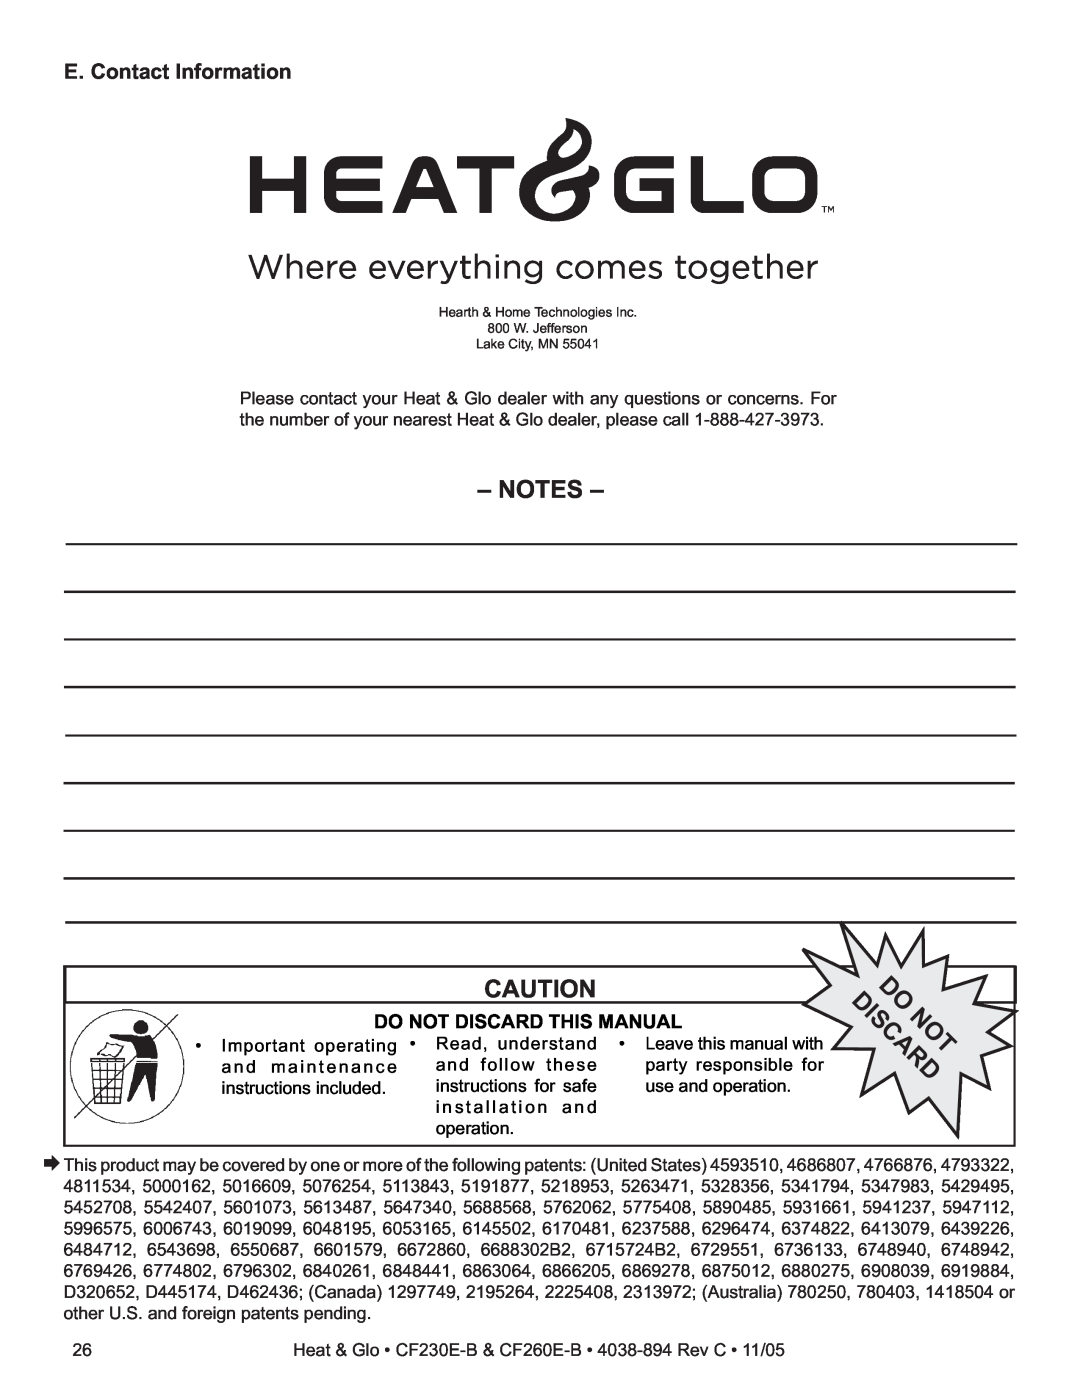 Heat & Glo LifeStyle CF230E-B, CF260E-B owner manual E. Contact Information, Do Not Discard This Manual, Do Discardnot 